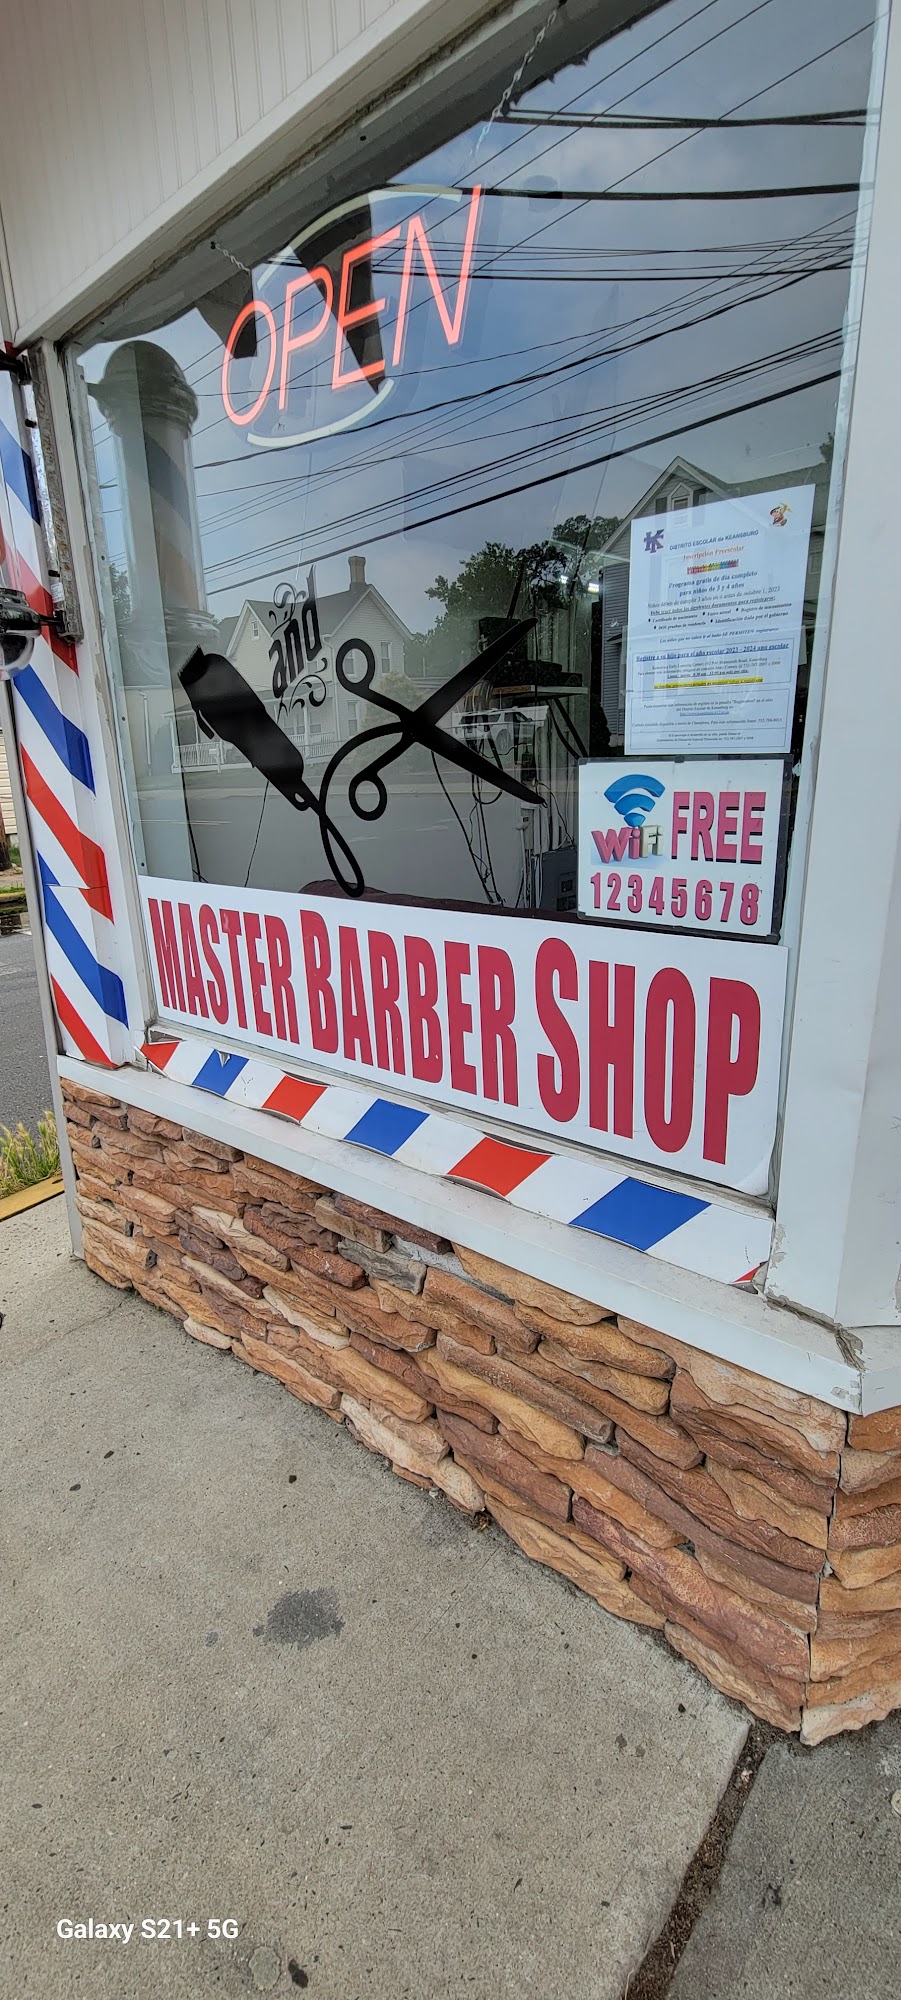 Master Barbershop 161 Main St, Keansburg New Jersey 07734